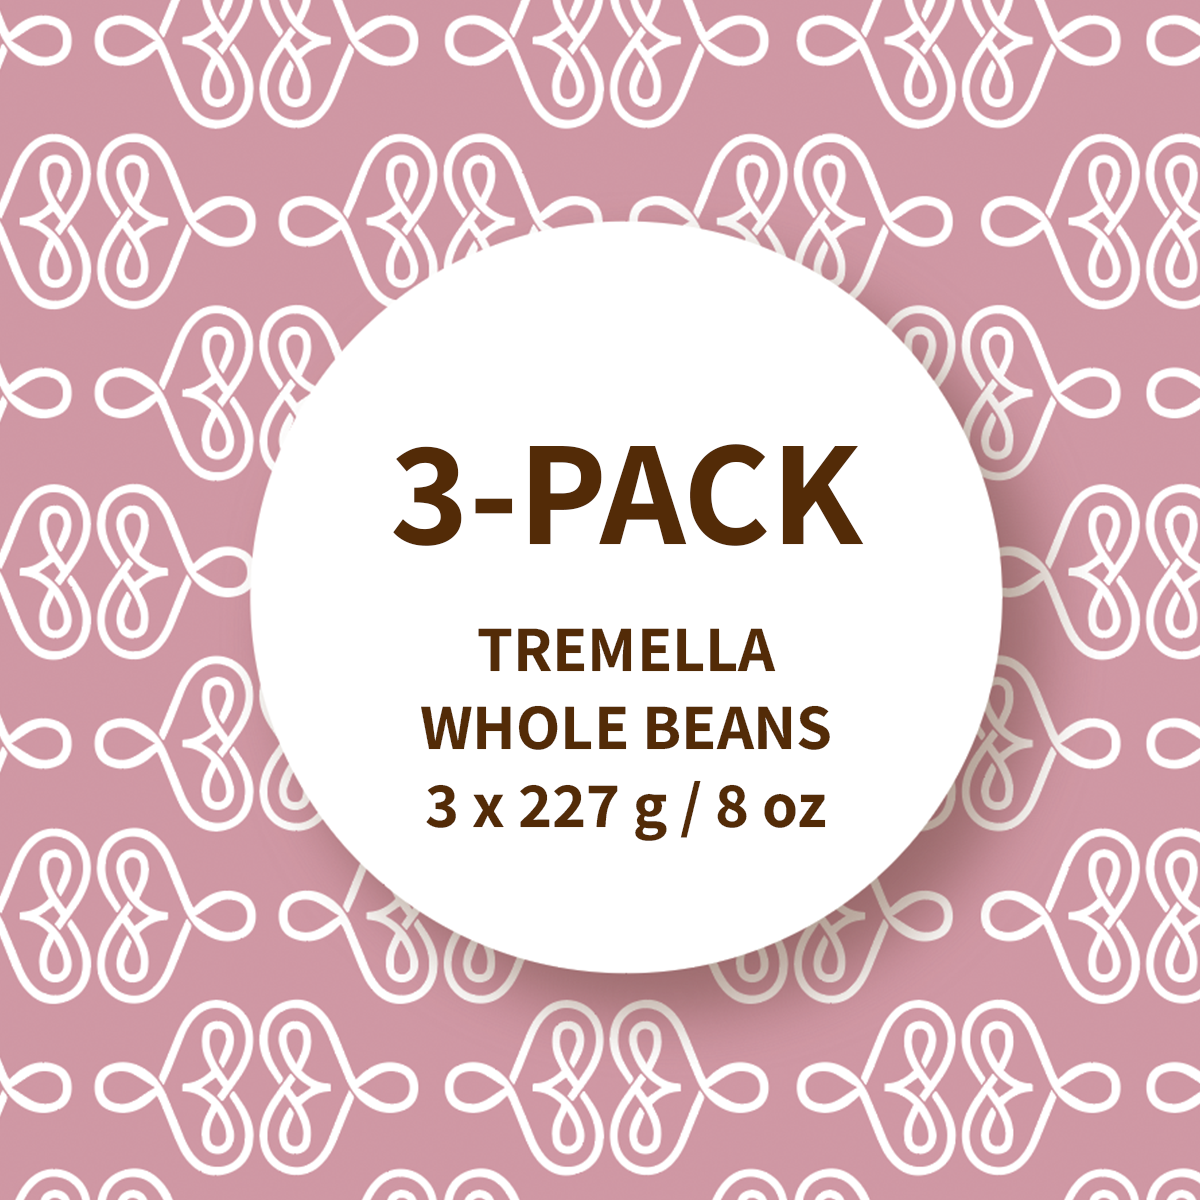 3-Pack - Tremella Whole Beans 227 g / 8 oz